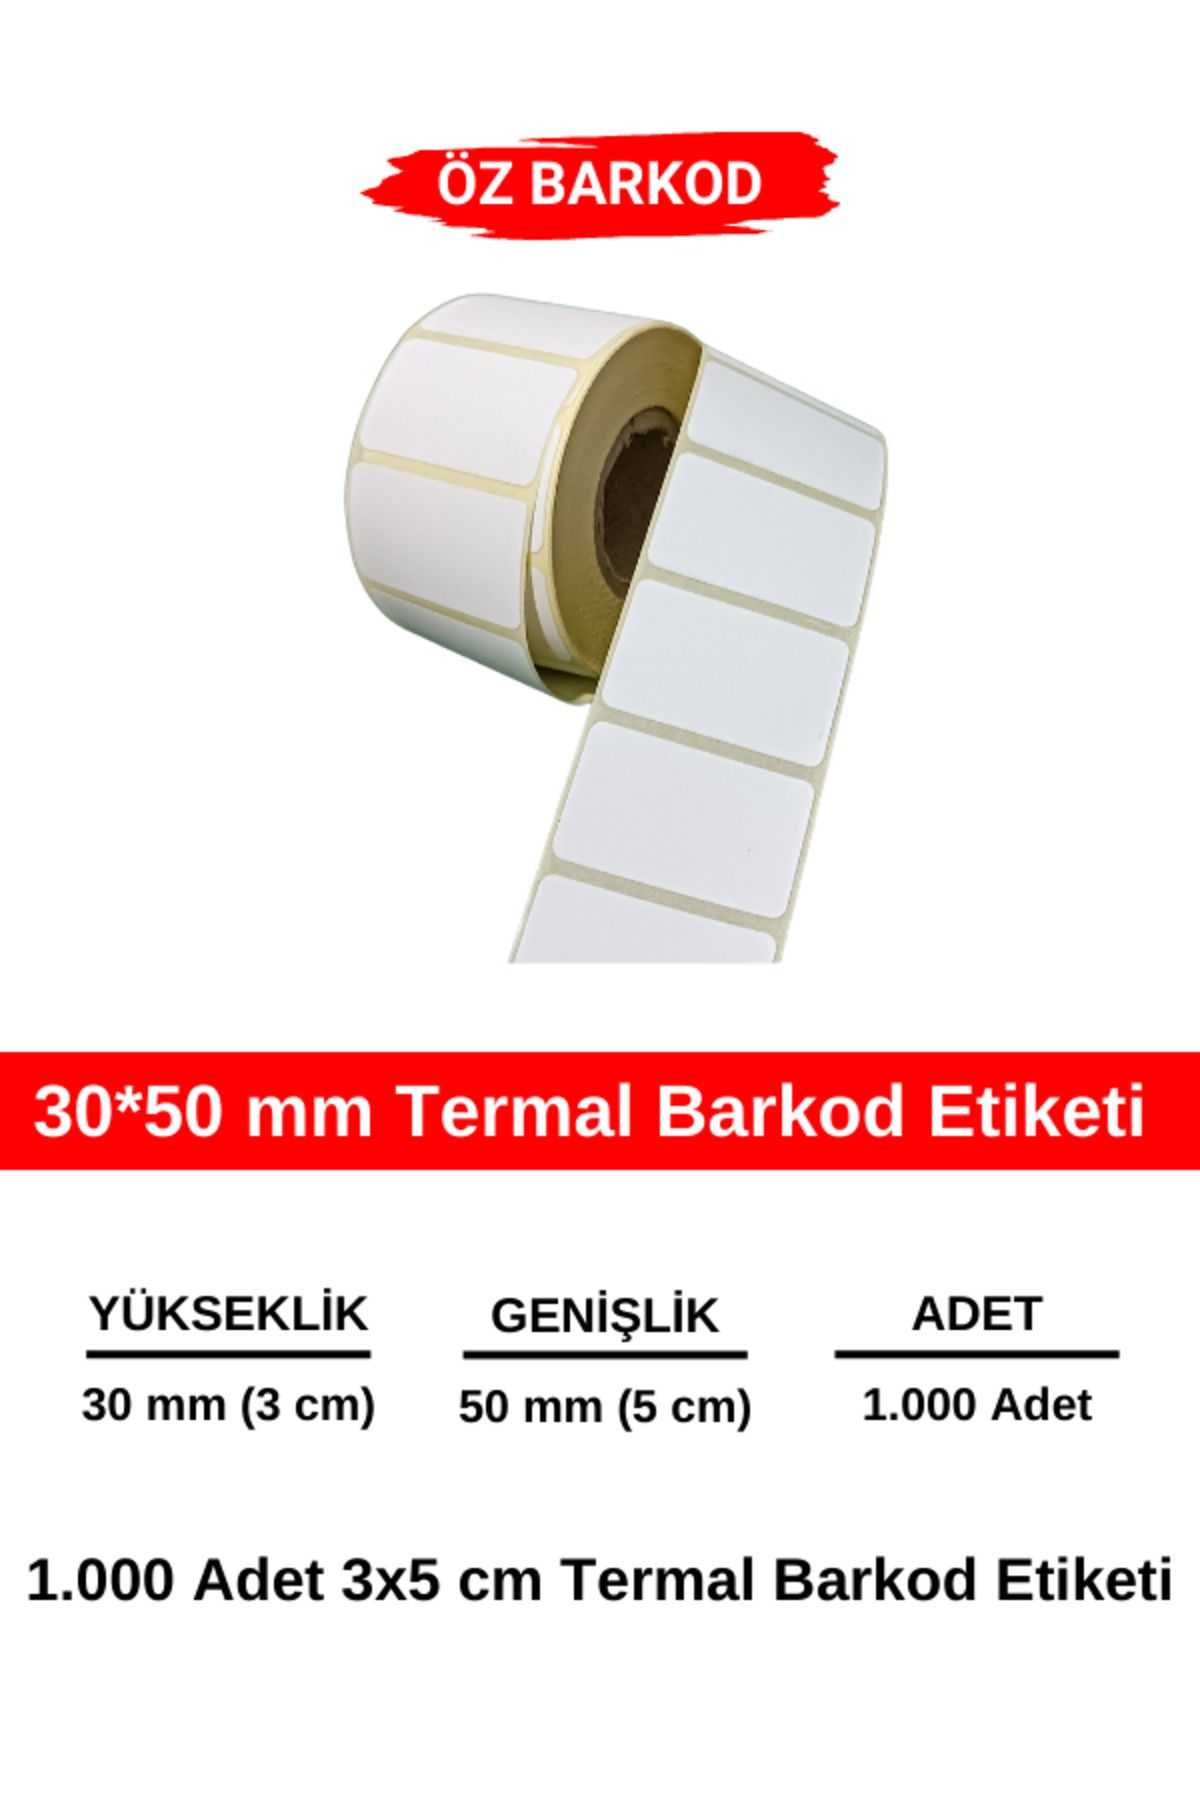 ÖZ BARKOD 30*50 mm Barkod Etiketi - 1000 Adet Termal Etiket